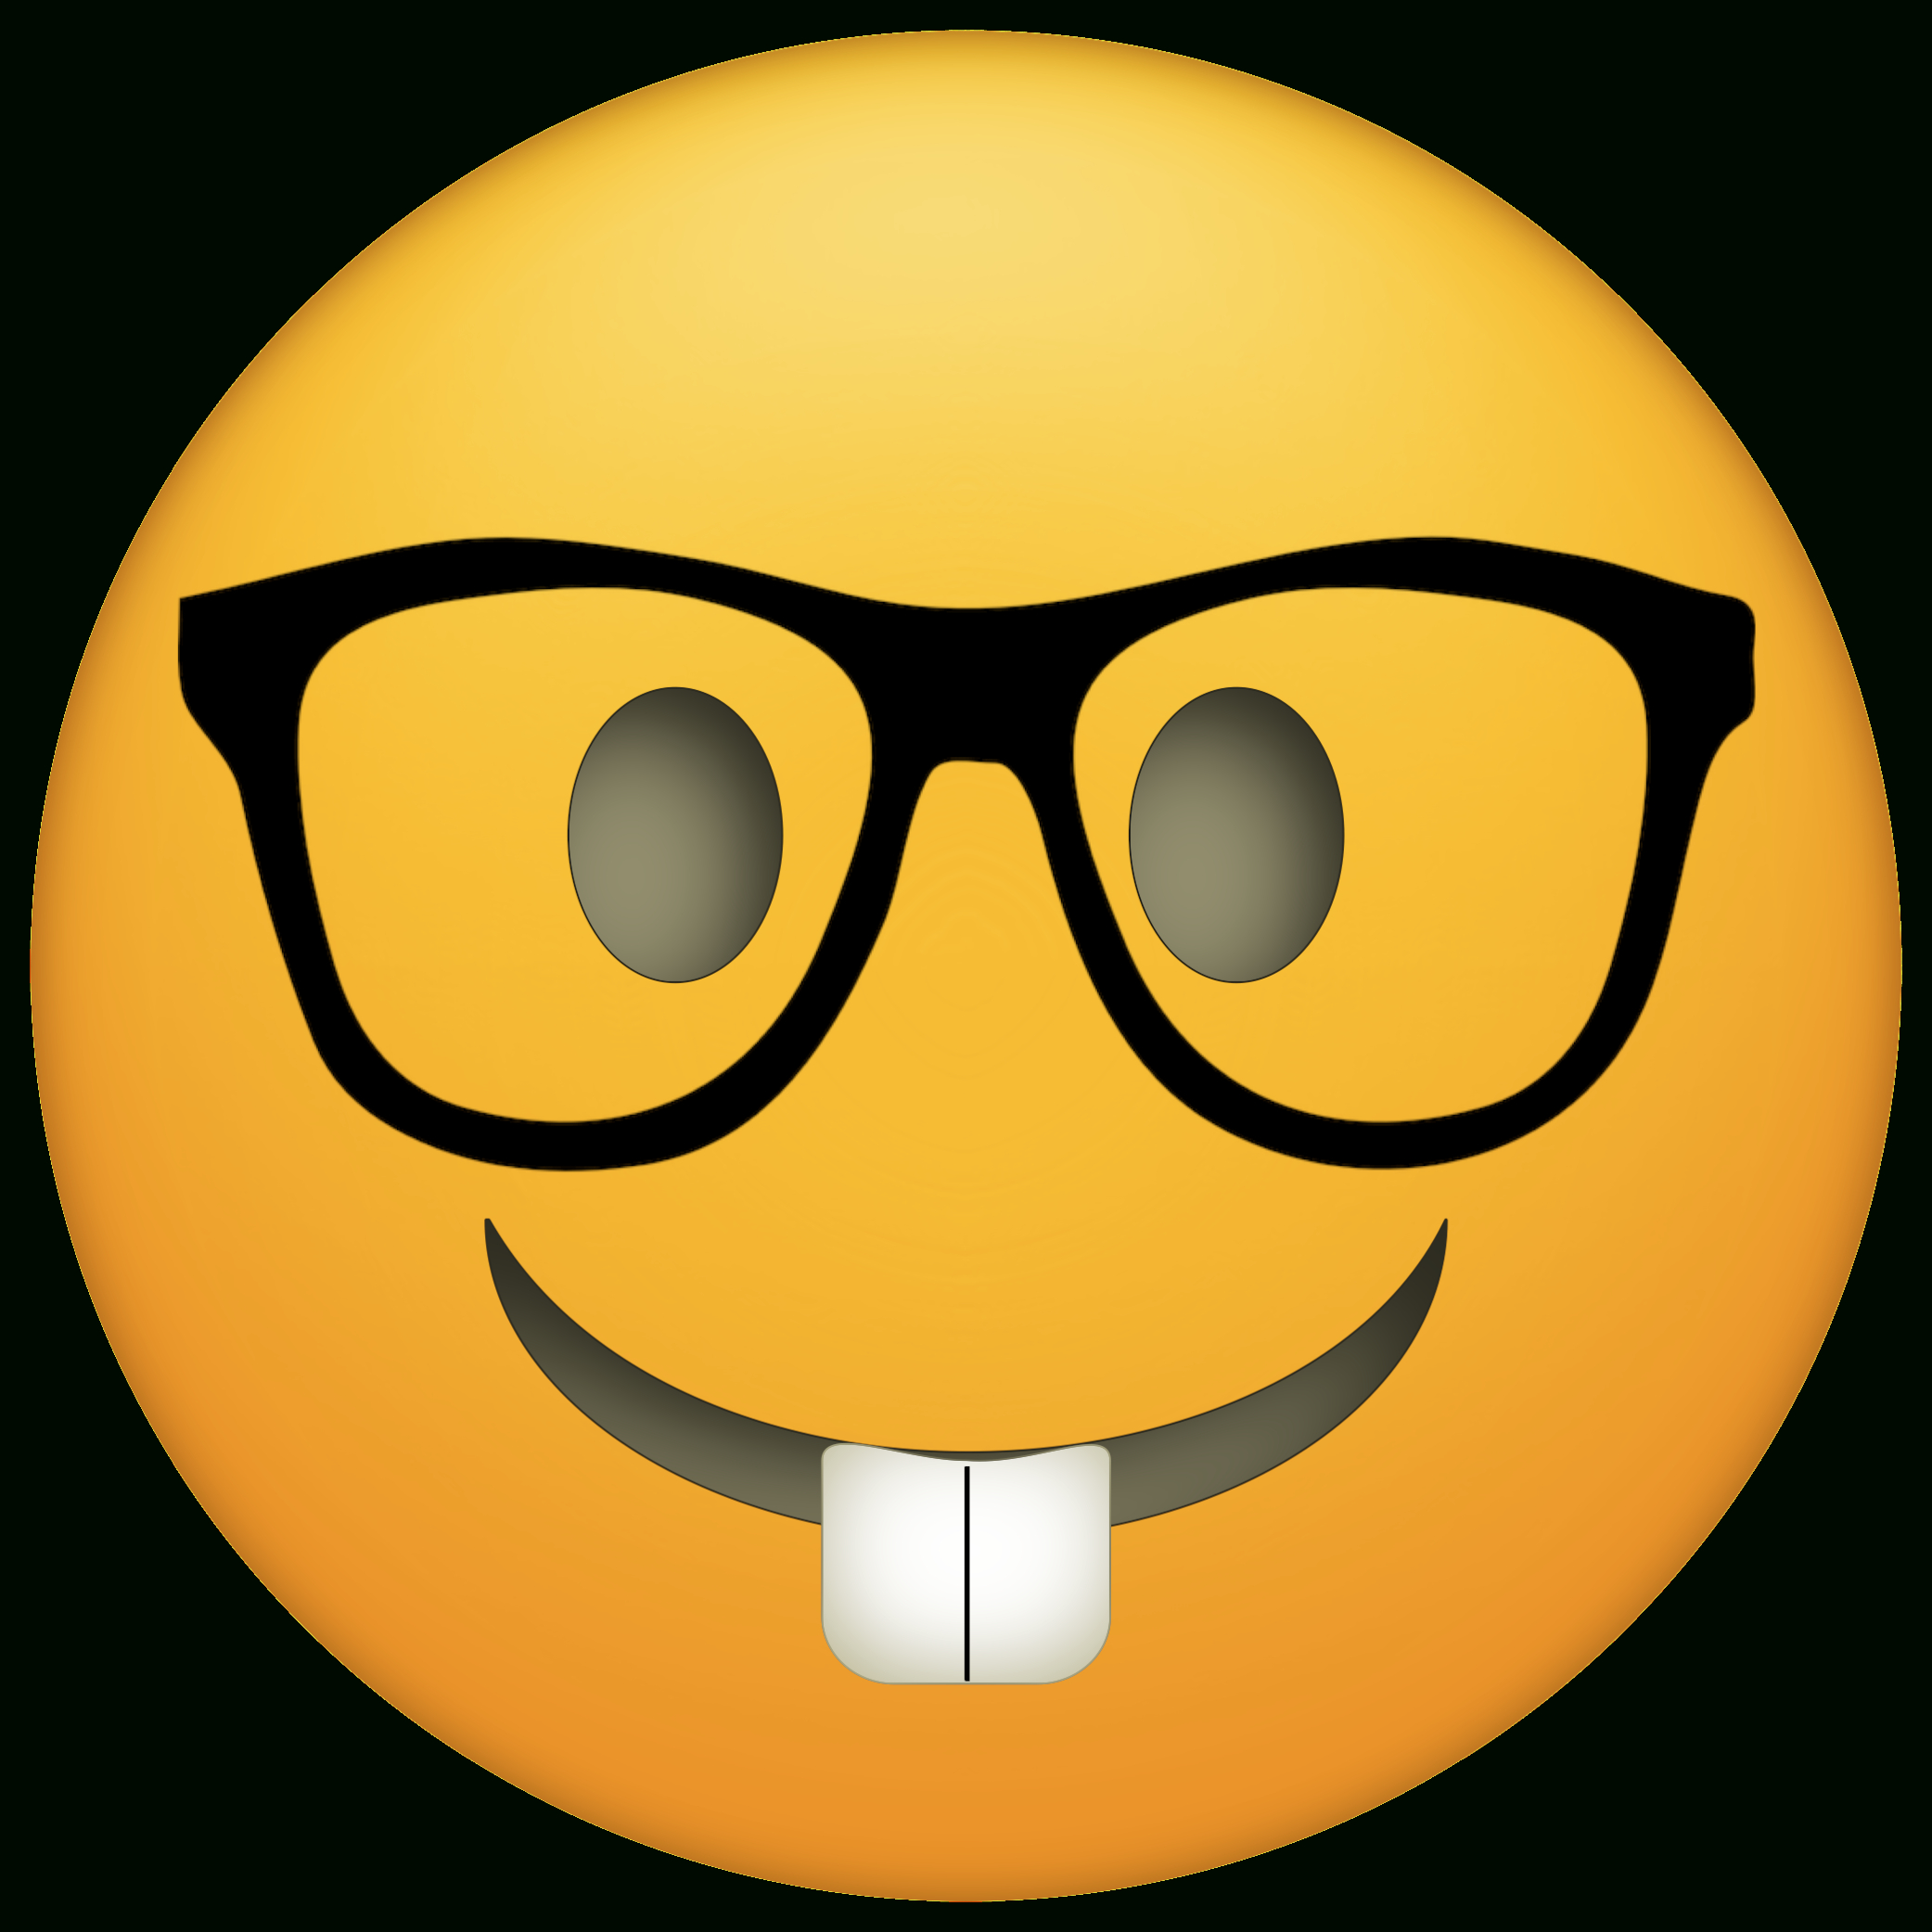 44 Awesome Printable Emojis | Kittybabylove - Free Printable Emoji Faces